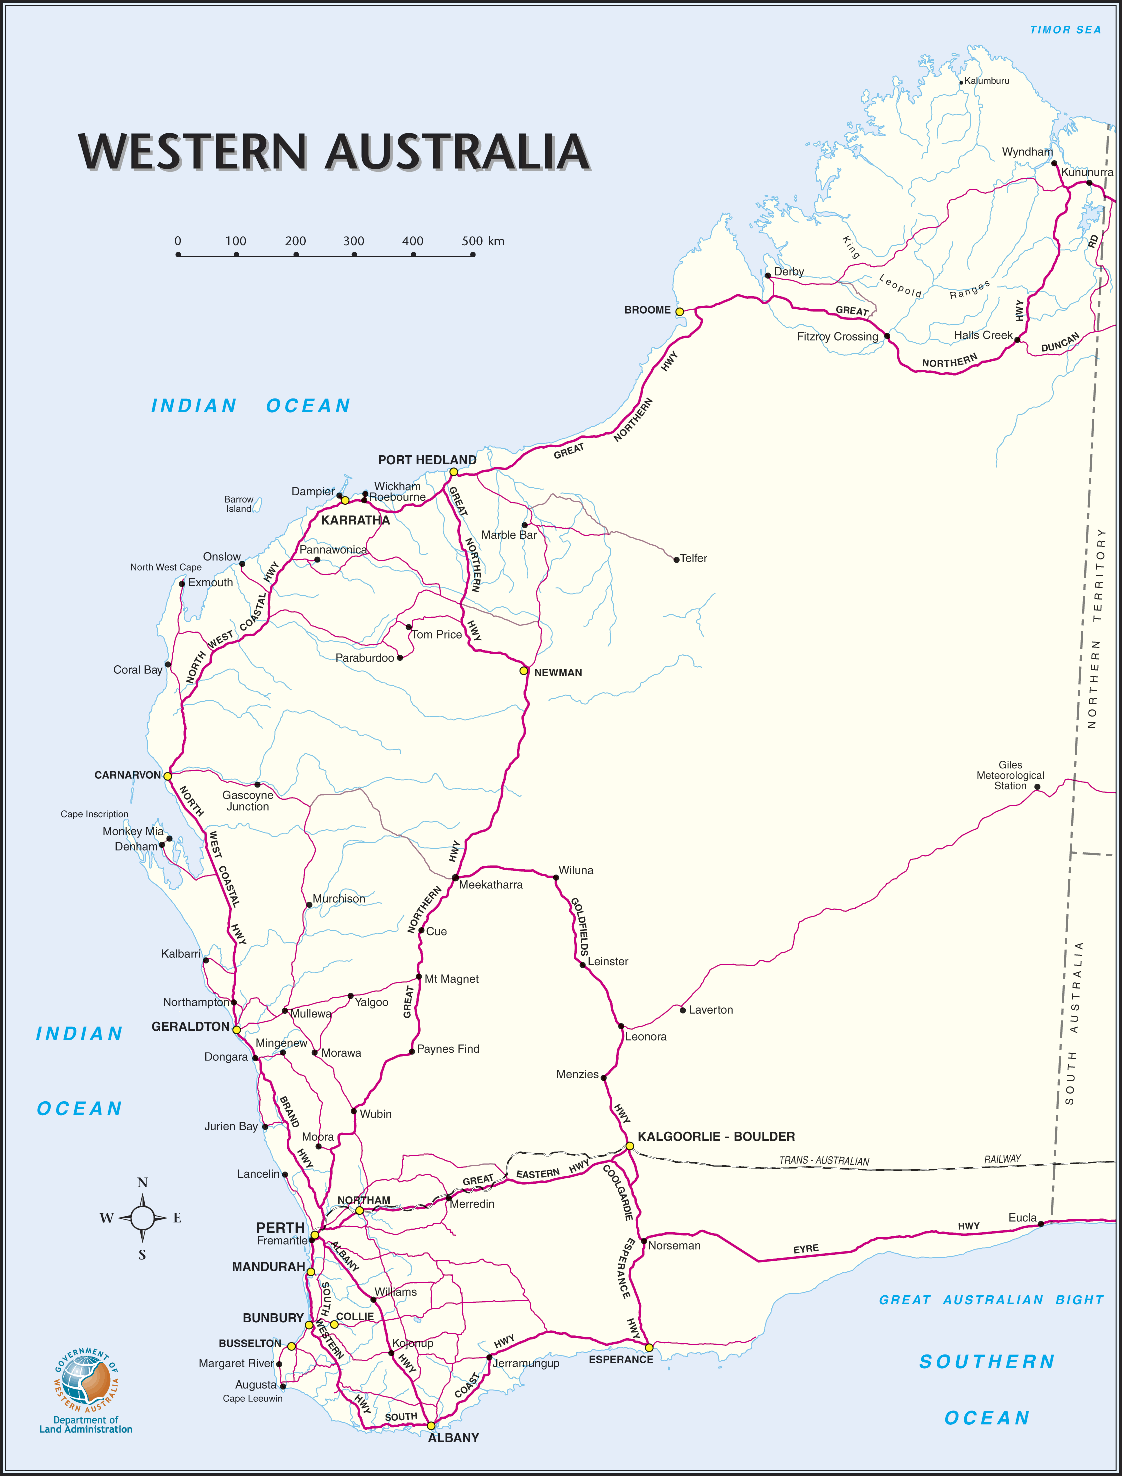 Karratha area map